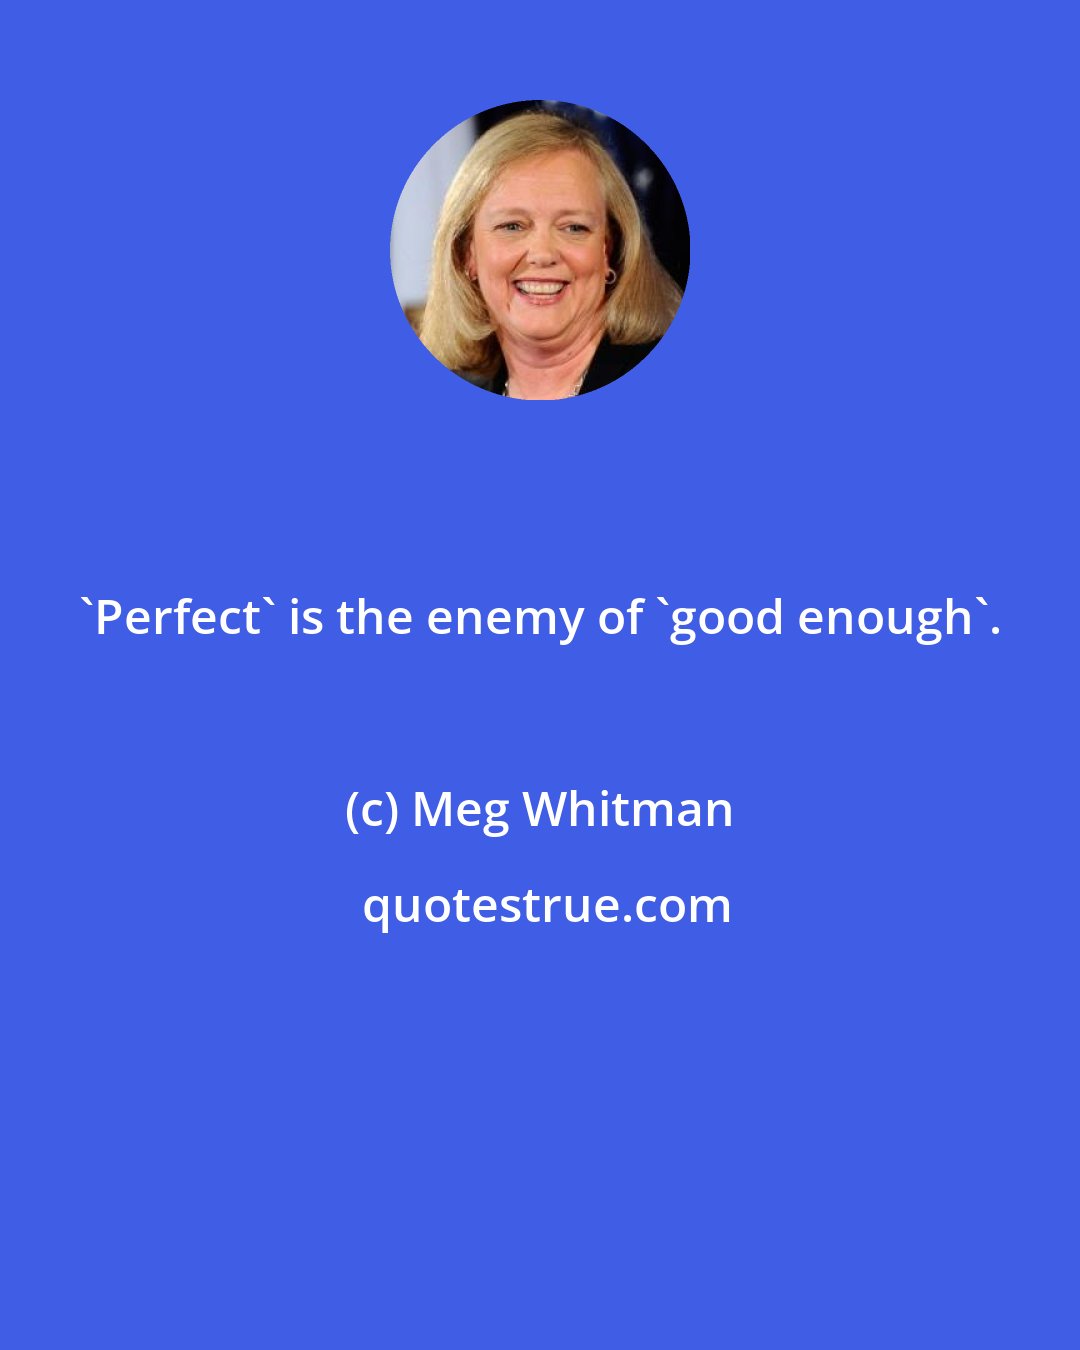 Meg Whitman: 'Perfect' is the enemy of 'good enough'.